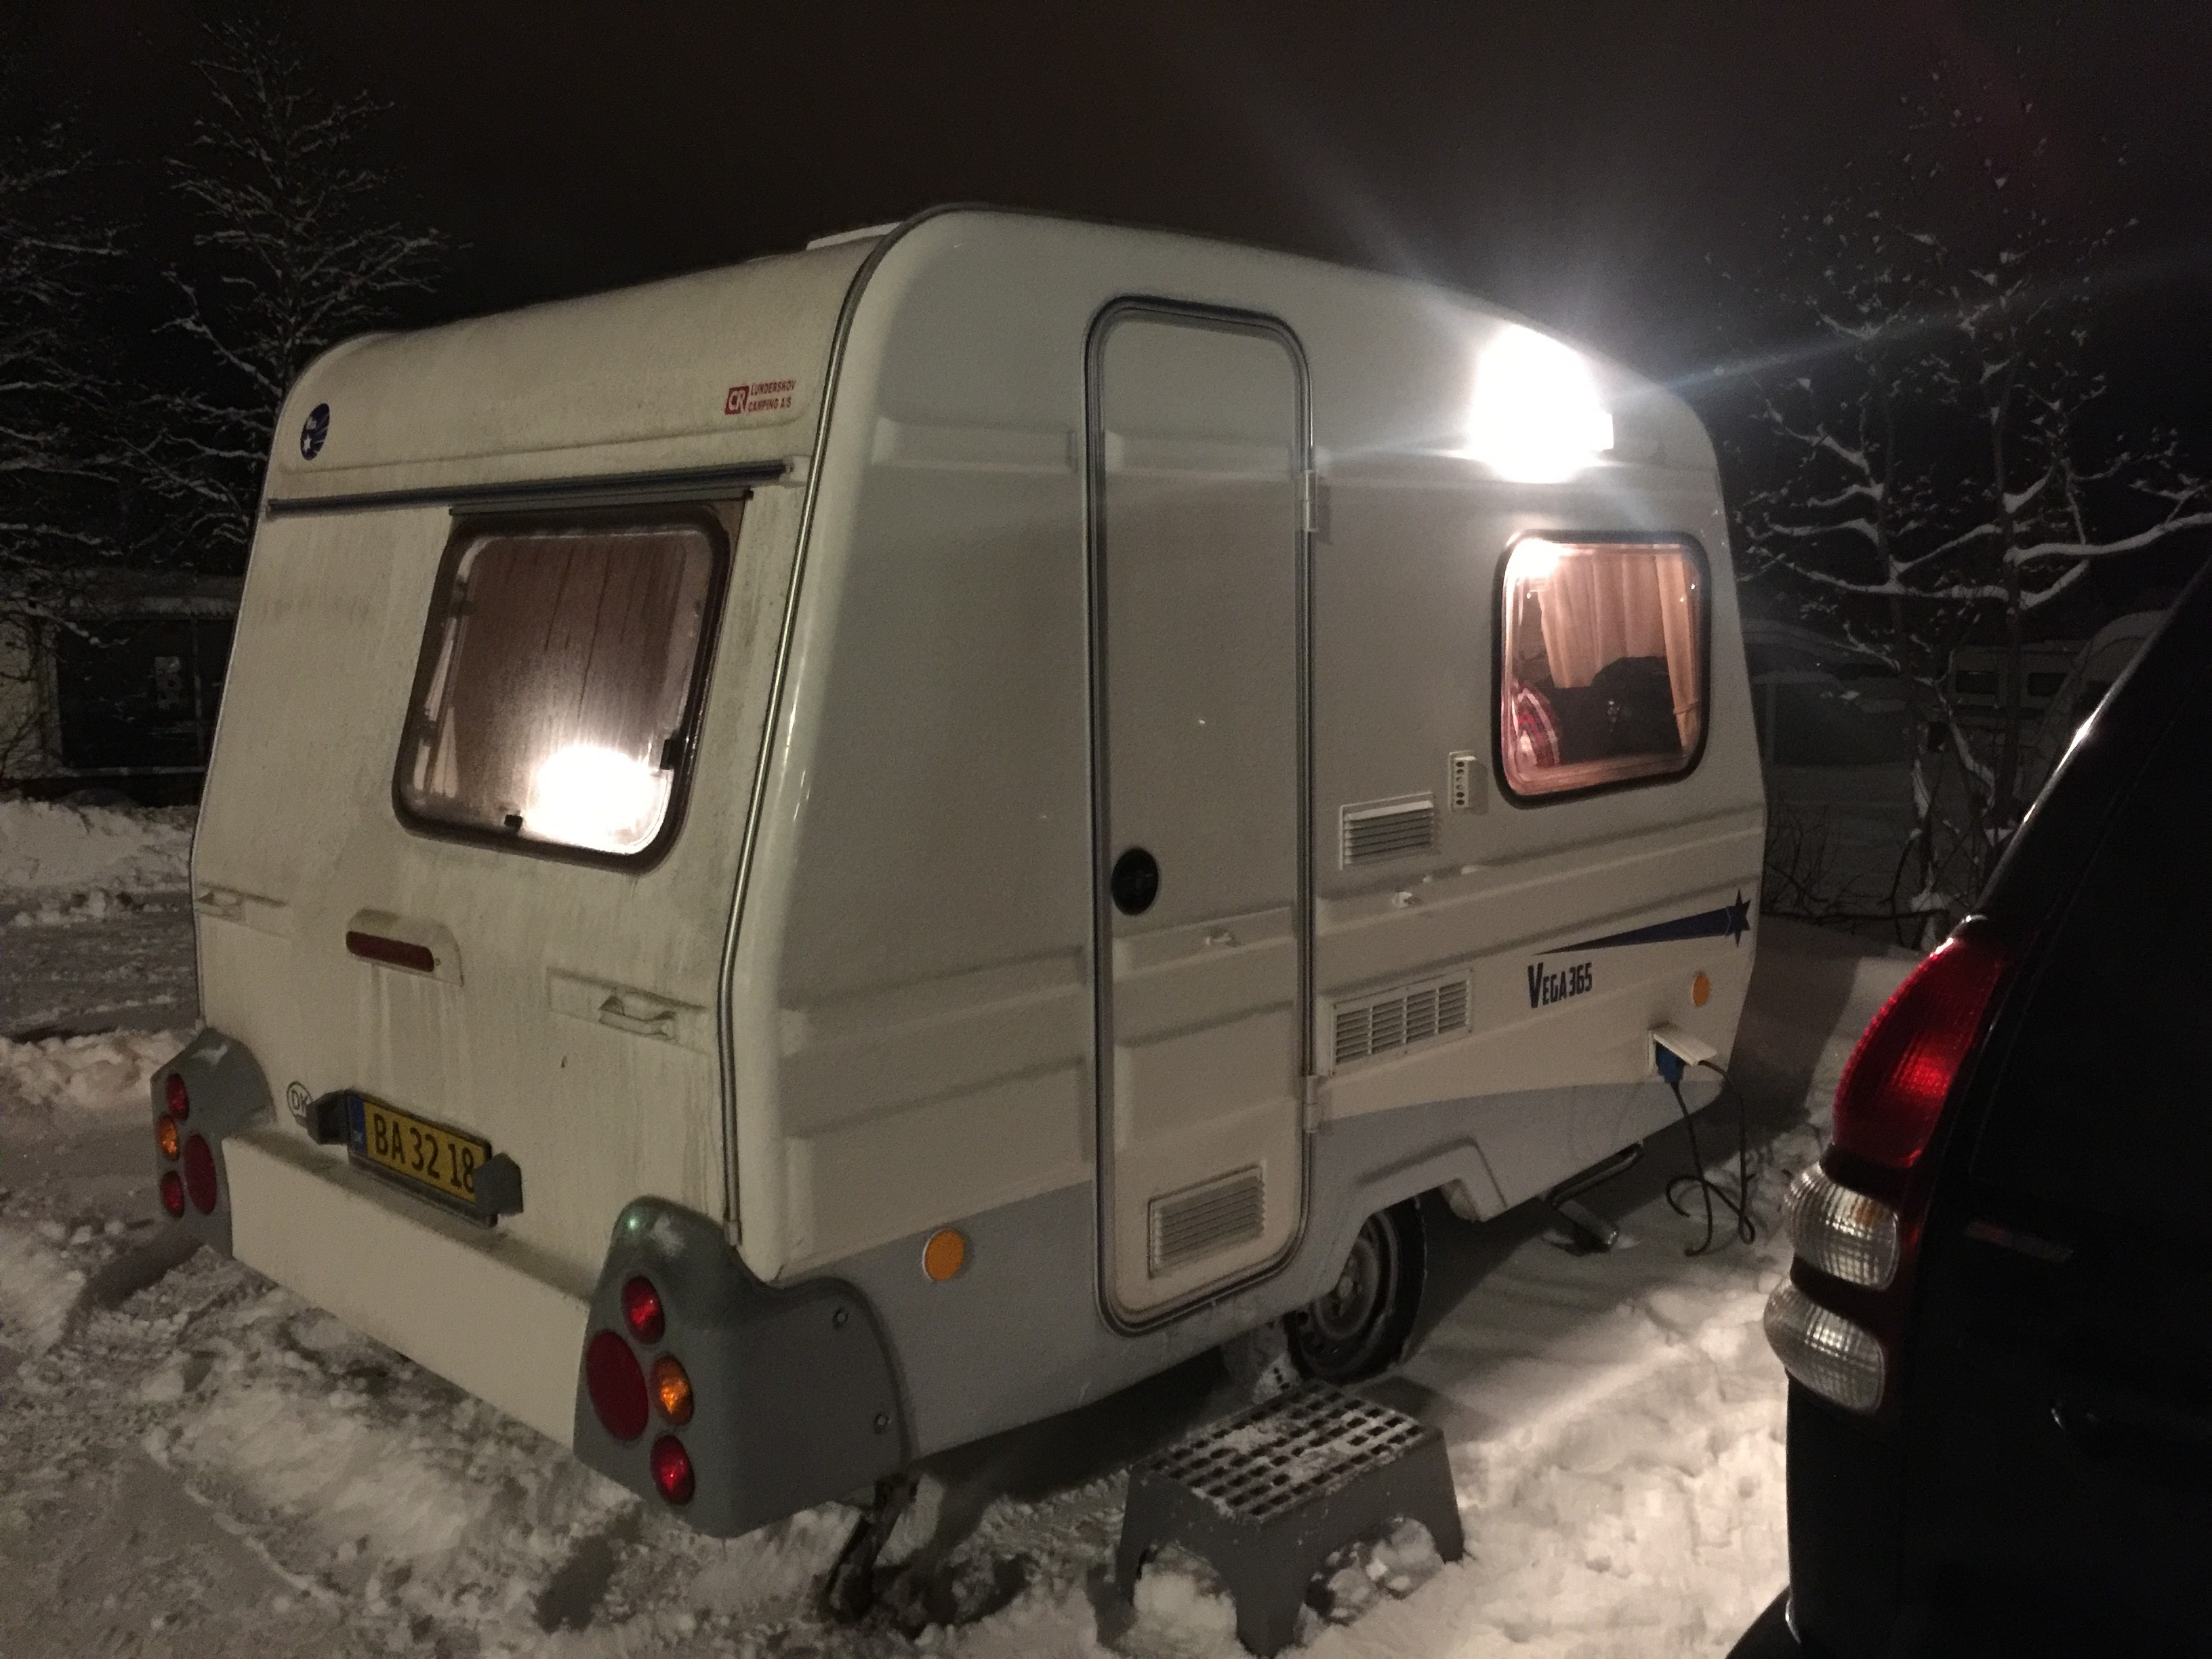 Vintertesten - del 2 - Danmarks billigste campingvogn (Reklame)